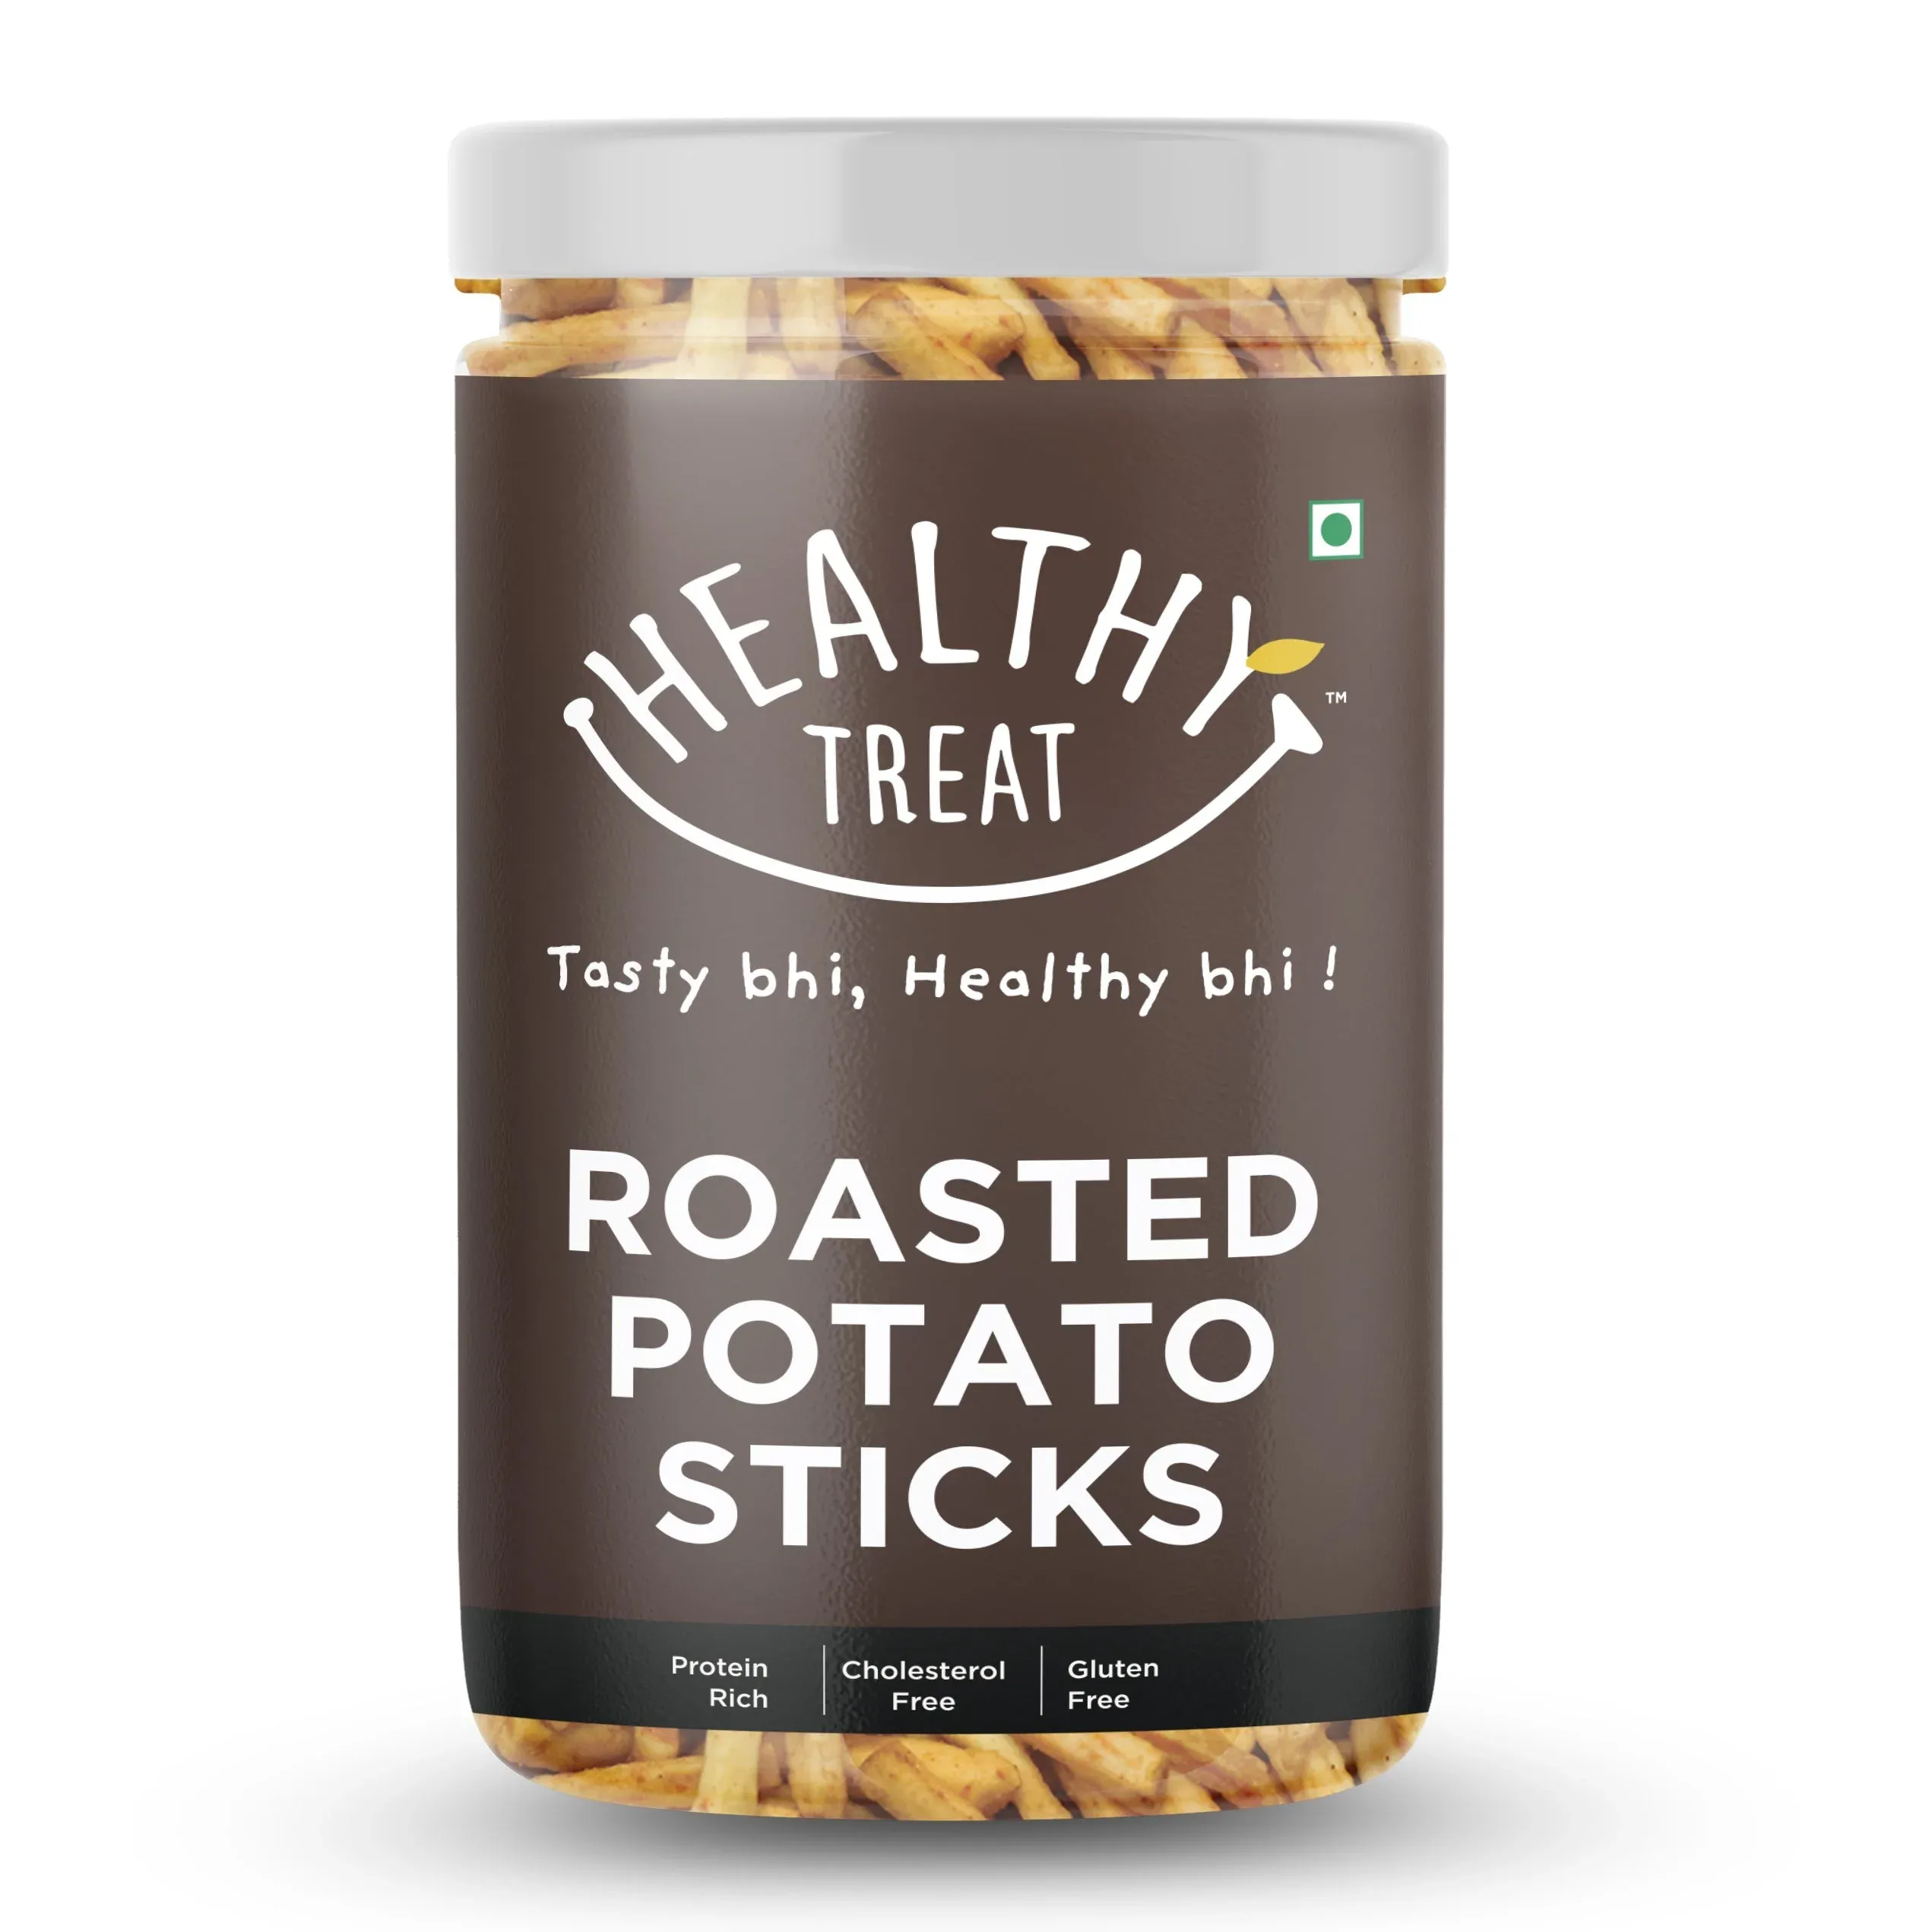 Healthy Treat Roasted Potato Sticks Image